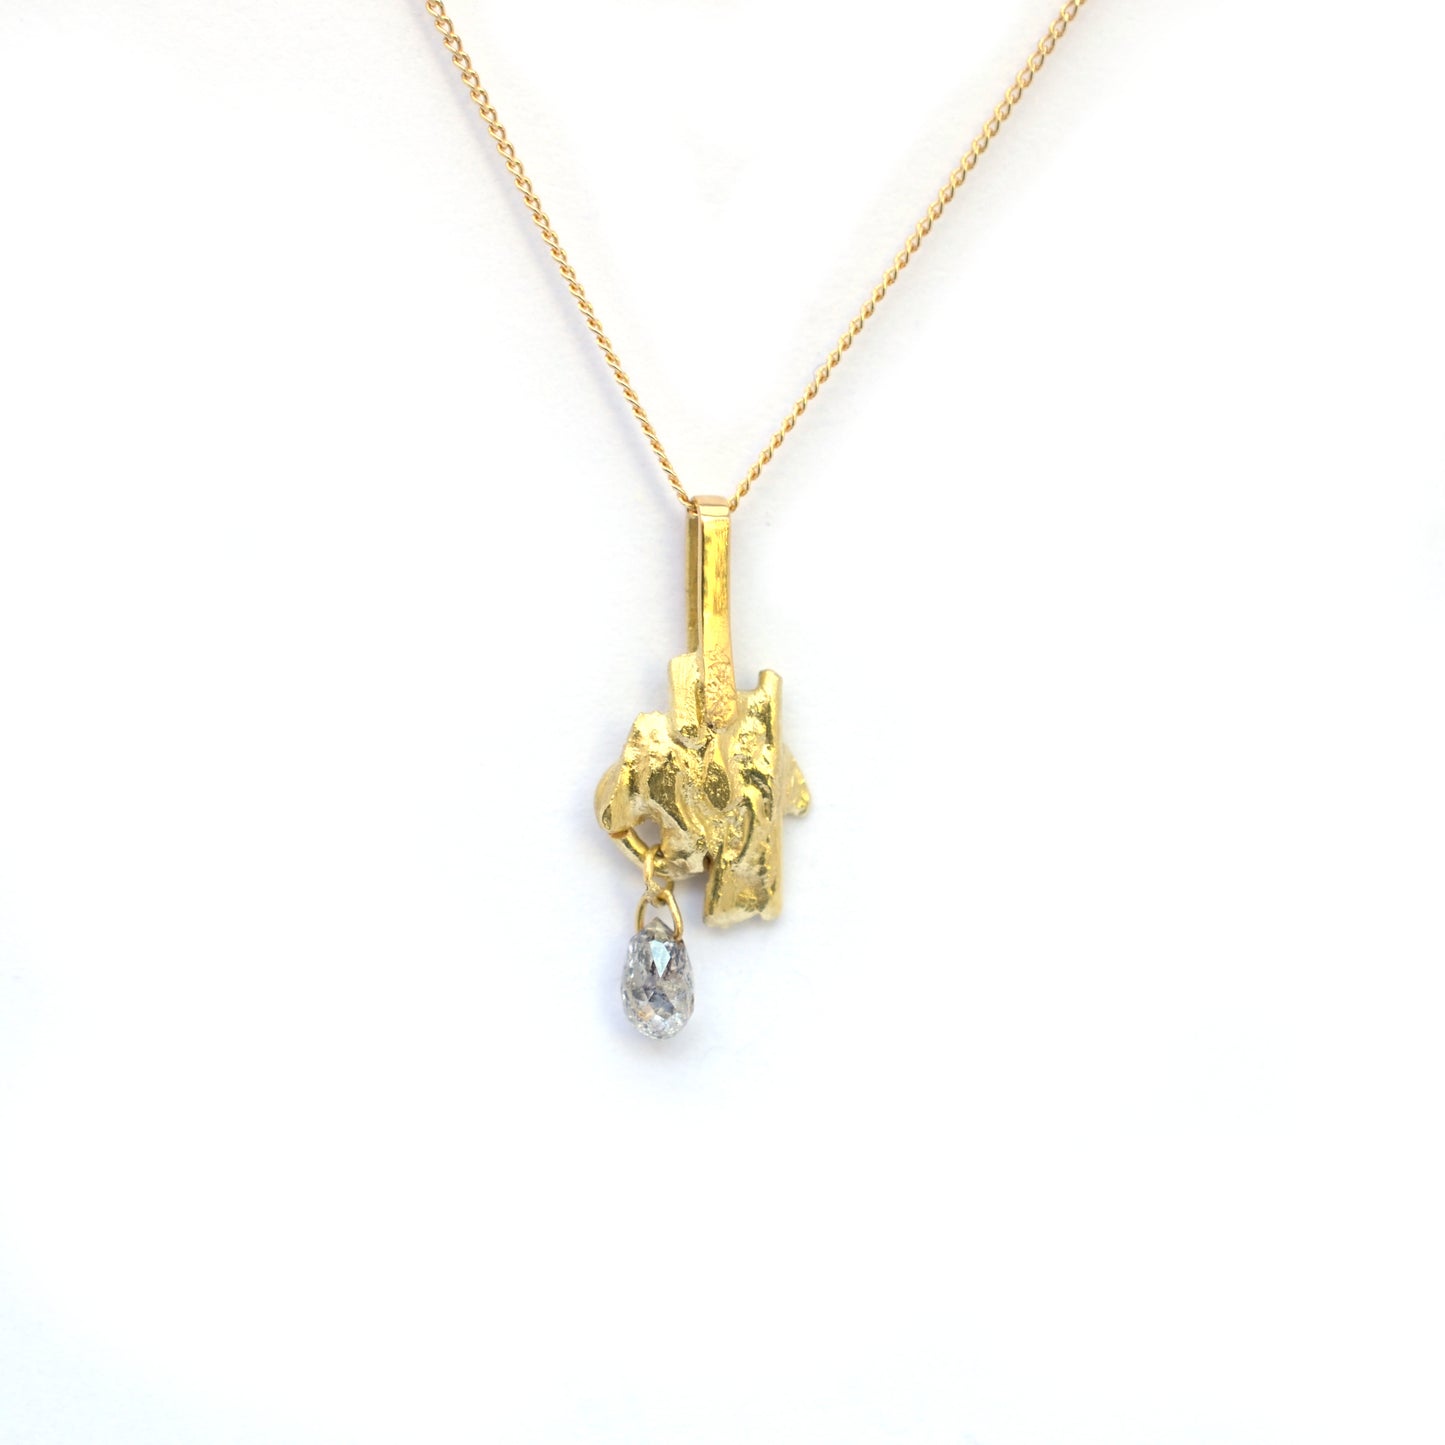 Golden flame diamond pendant